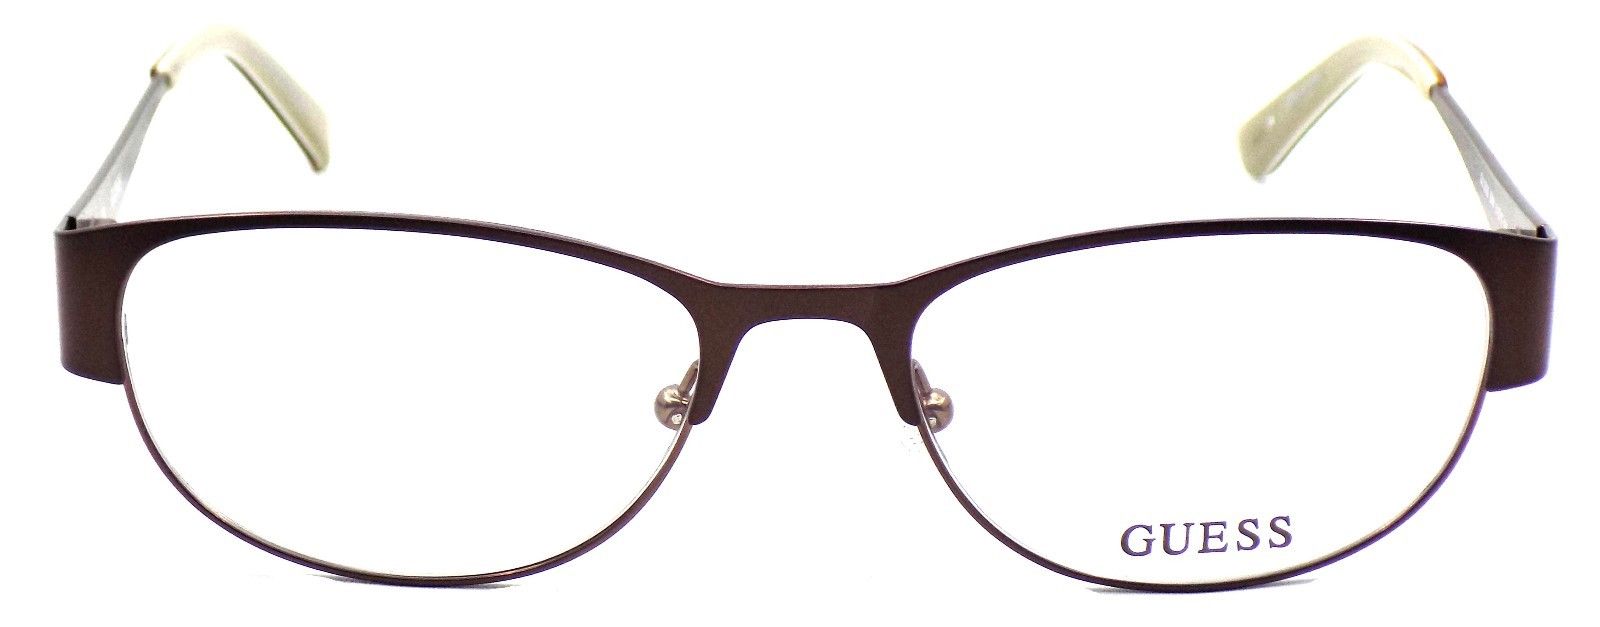 2-GUESS GU2330 BRN Women's Eyeglasses Frames 51-17-135 Brown + CASE-715583591004-IKSpecs